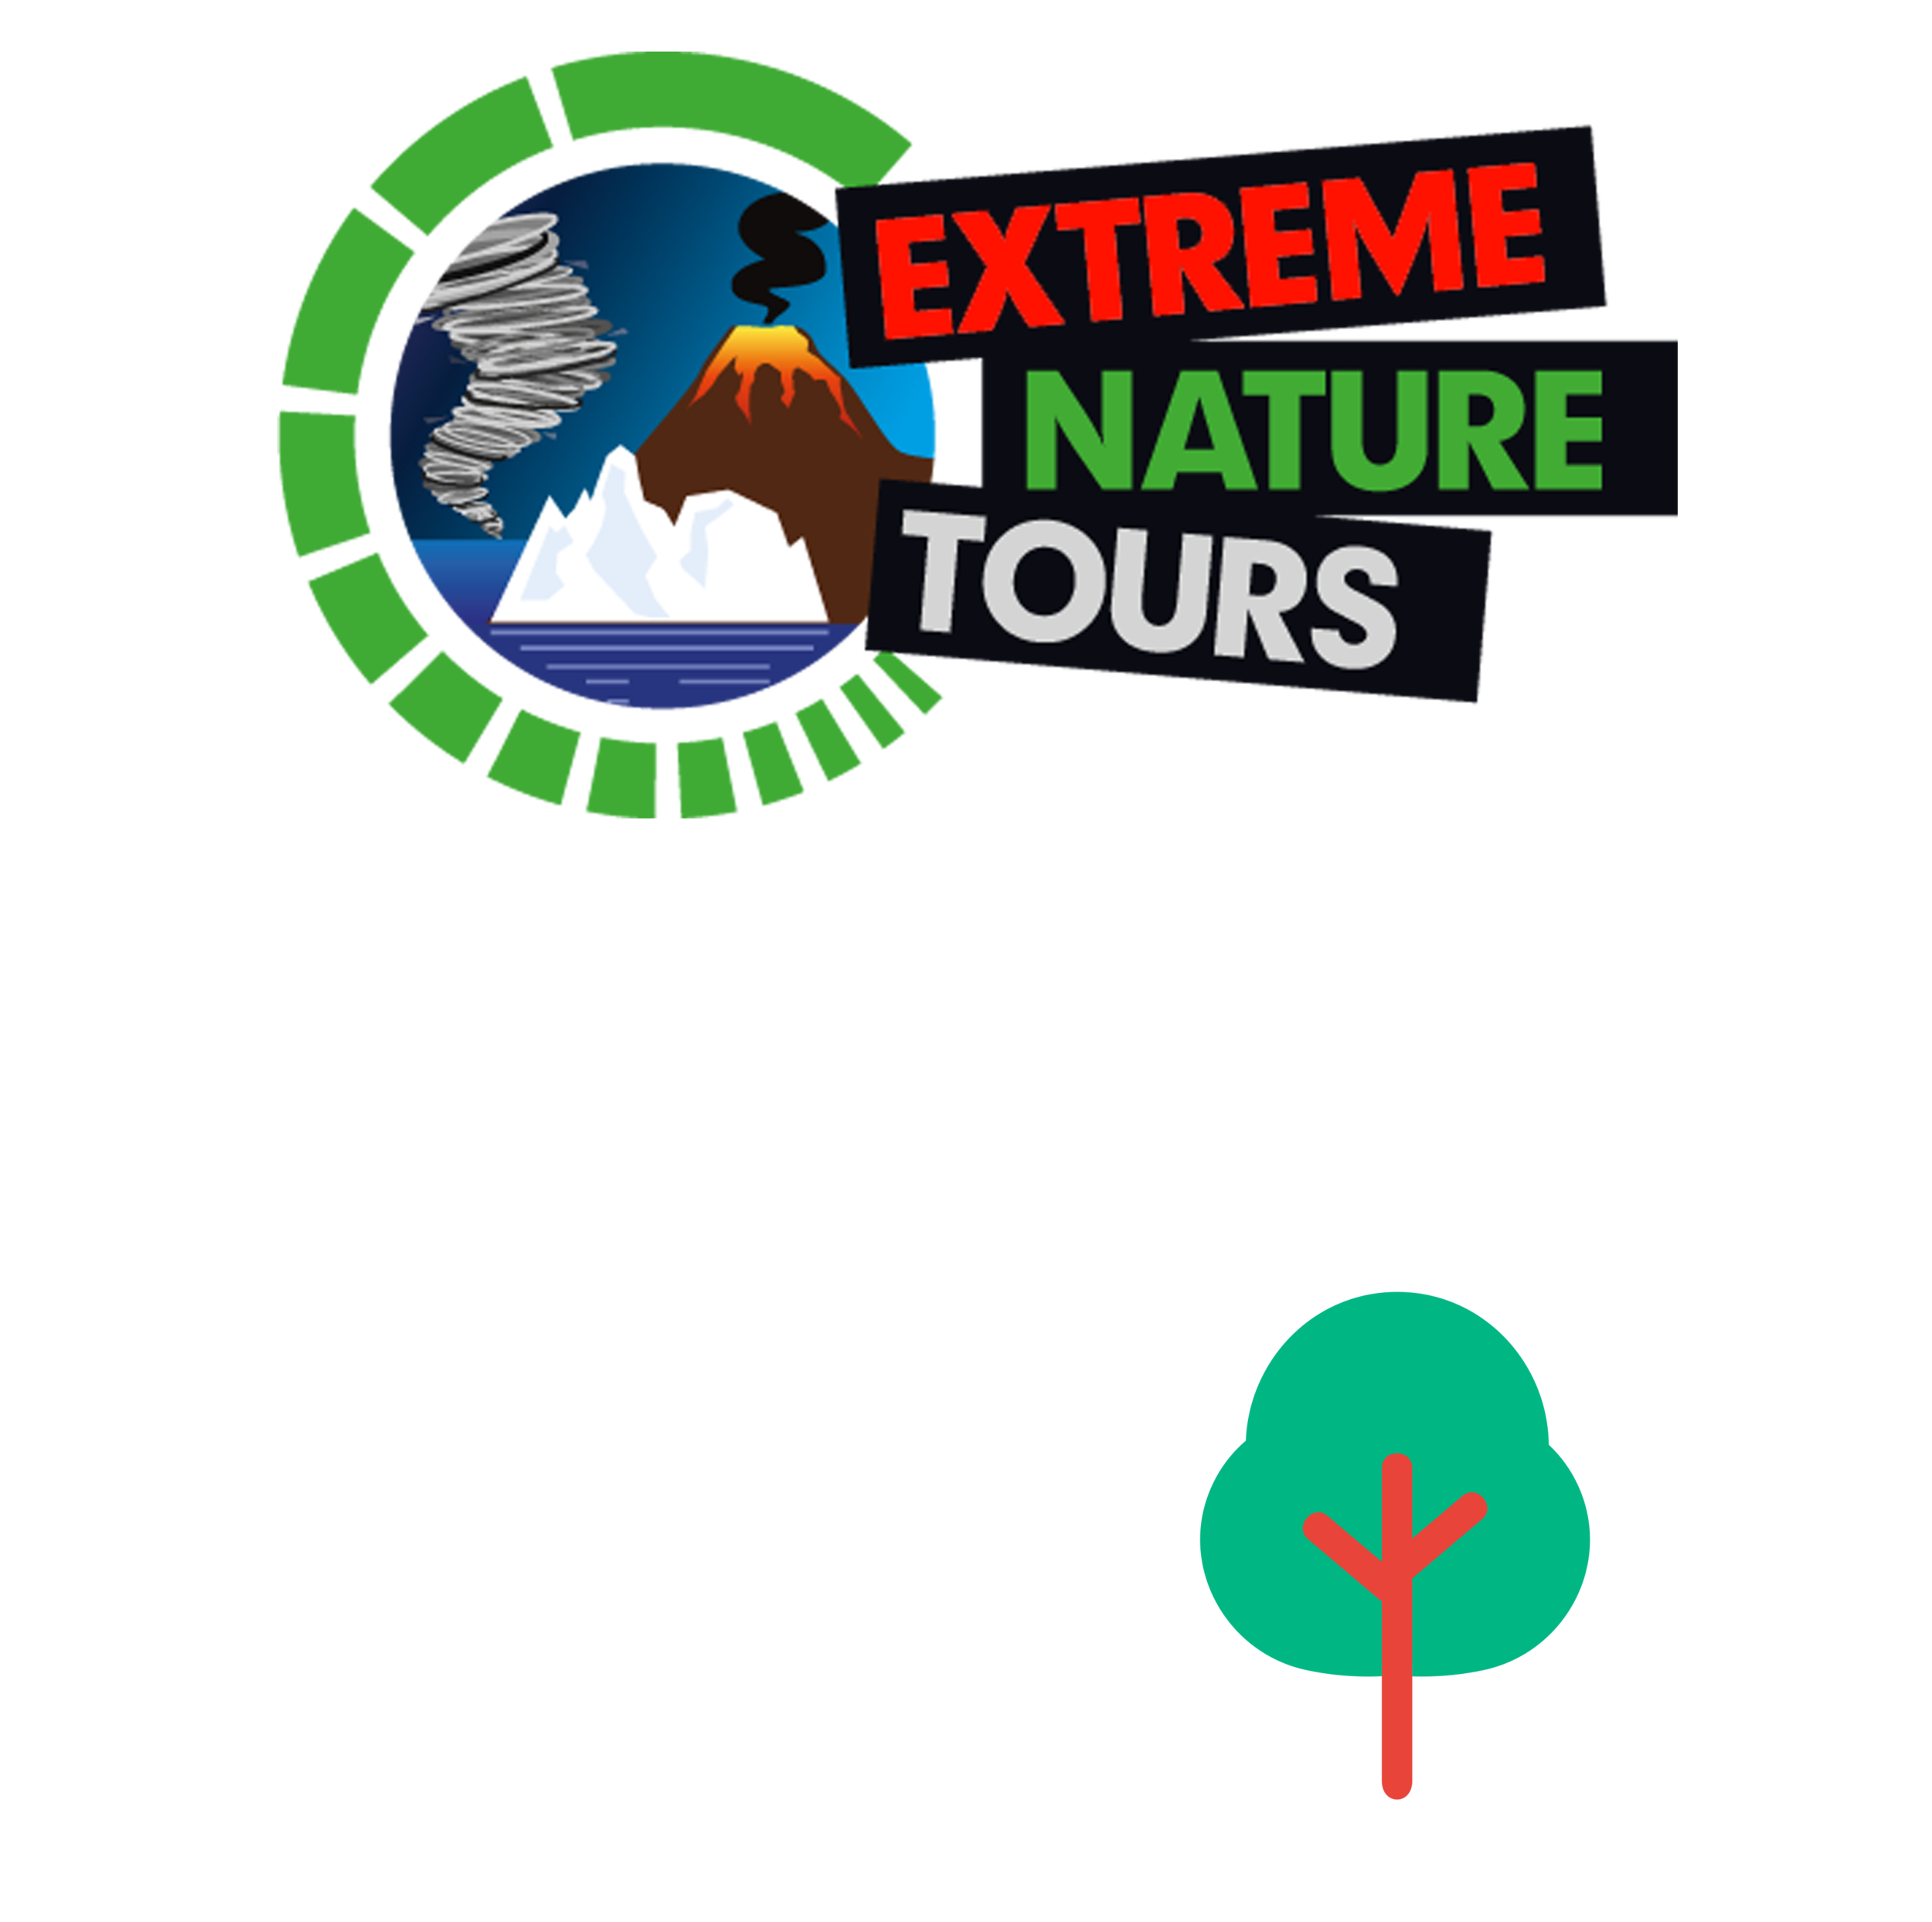 Extreme Nature Tours